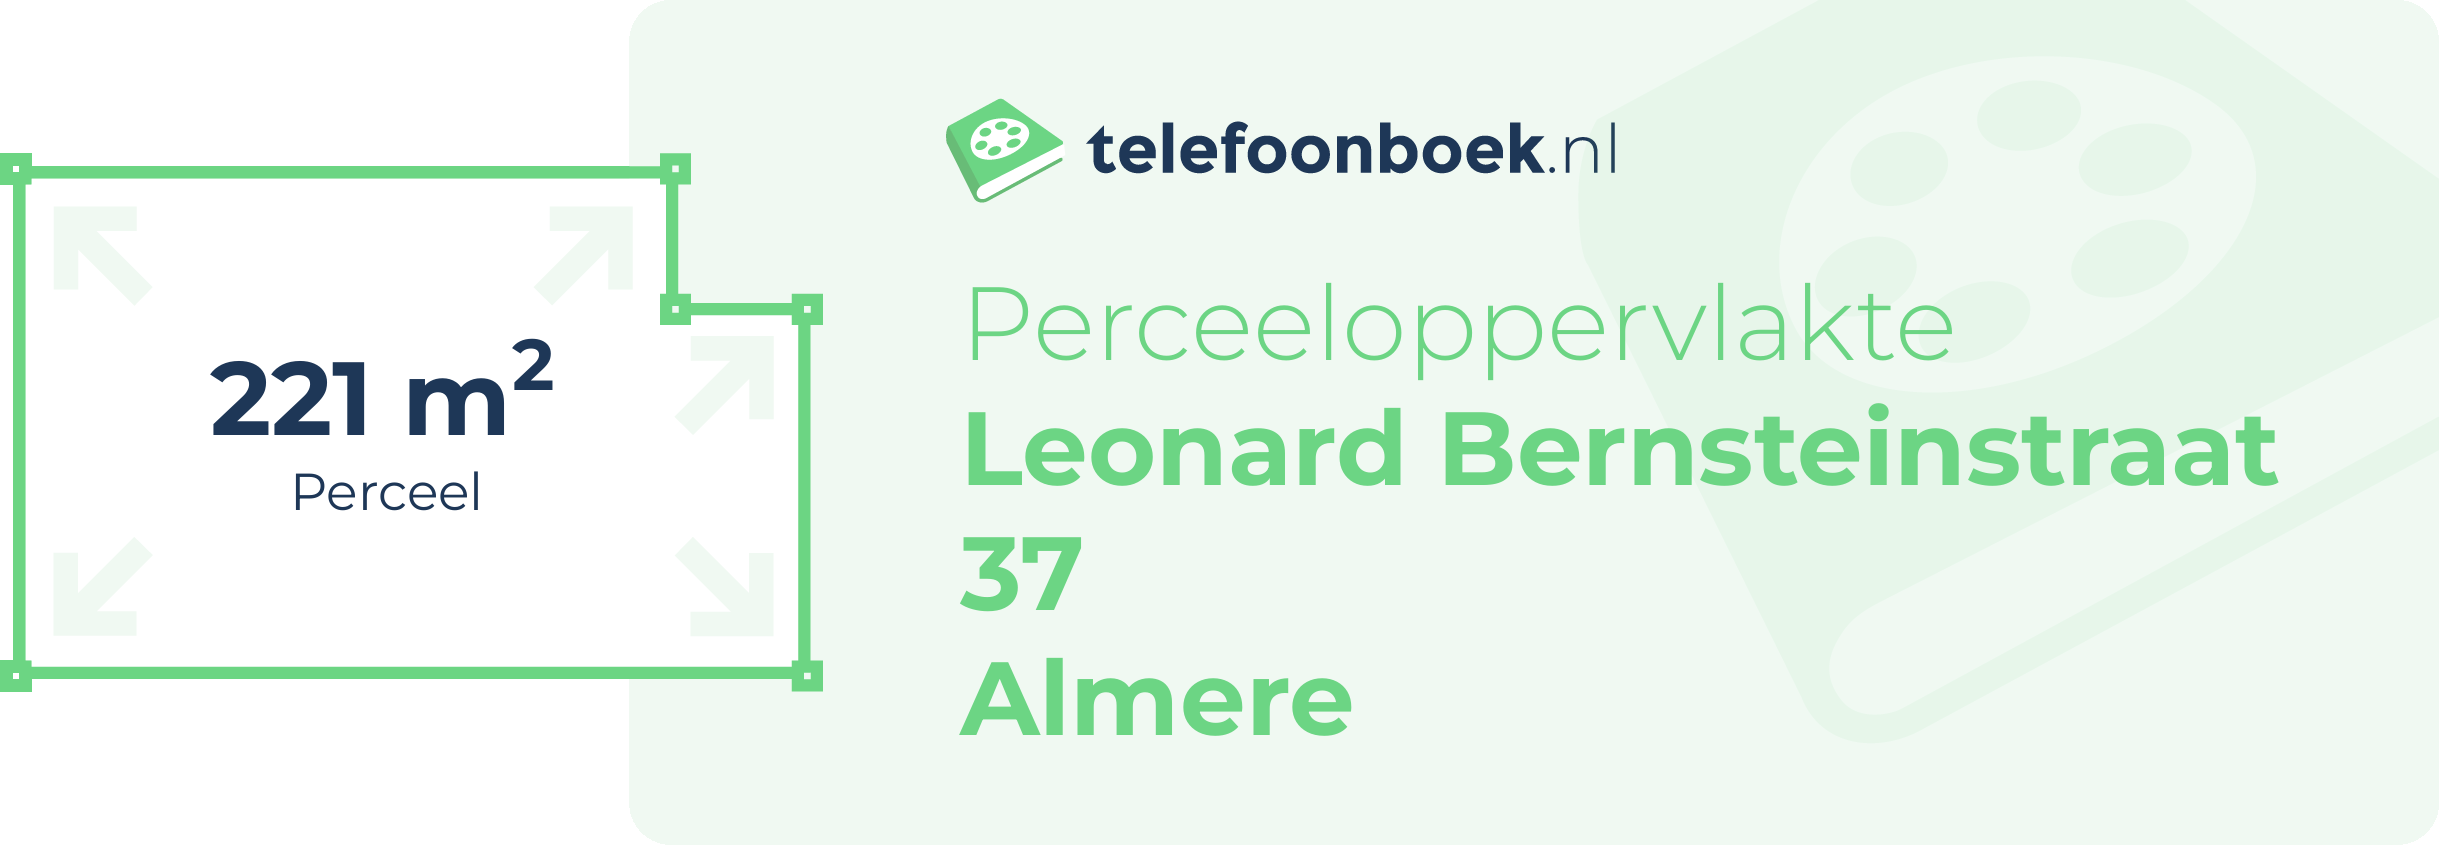 Perceeloppervlakte Leonard Bernsteinstraat 37 Almere